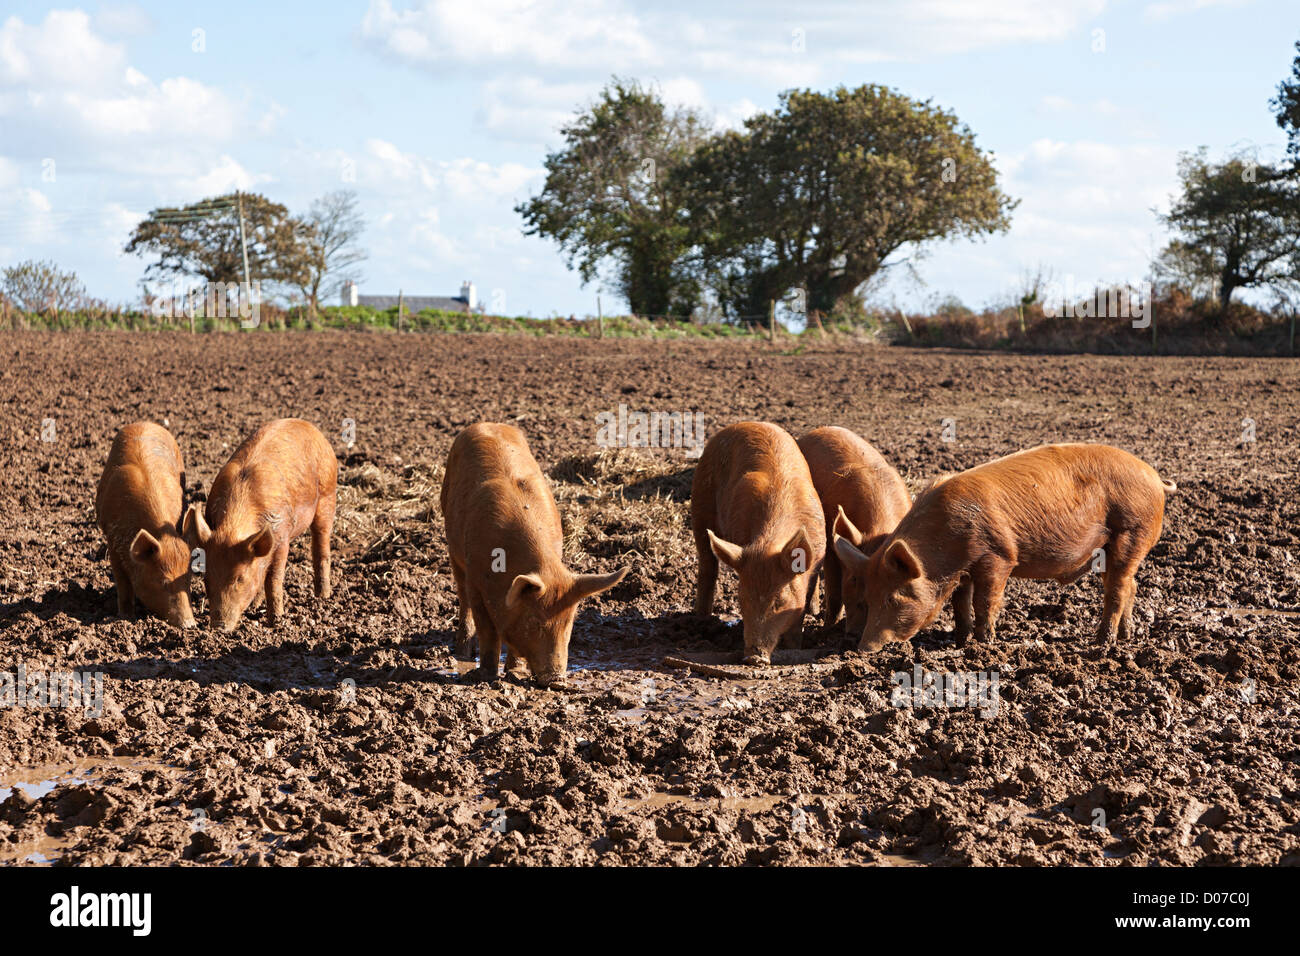 Pigs in muddy field, Jersey, Channel Islands, UK Stock Photo